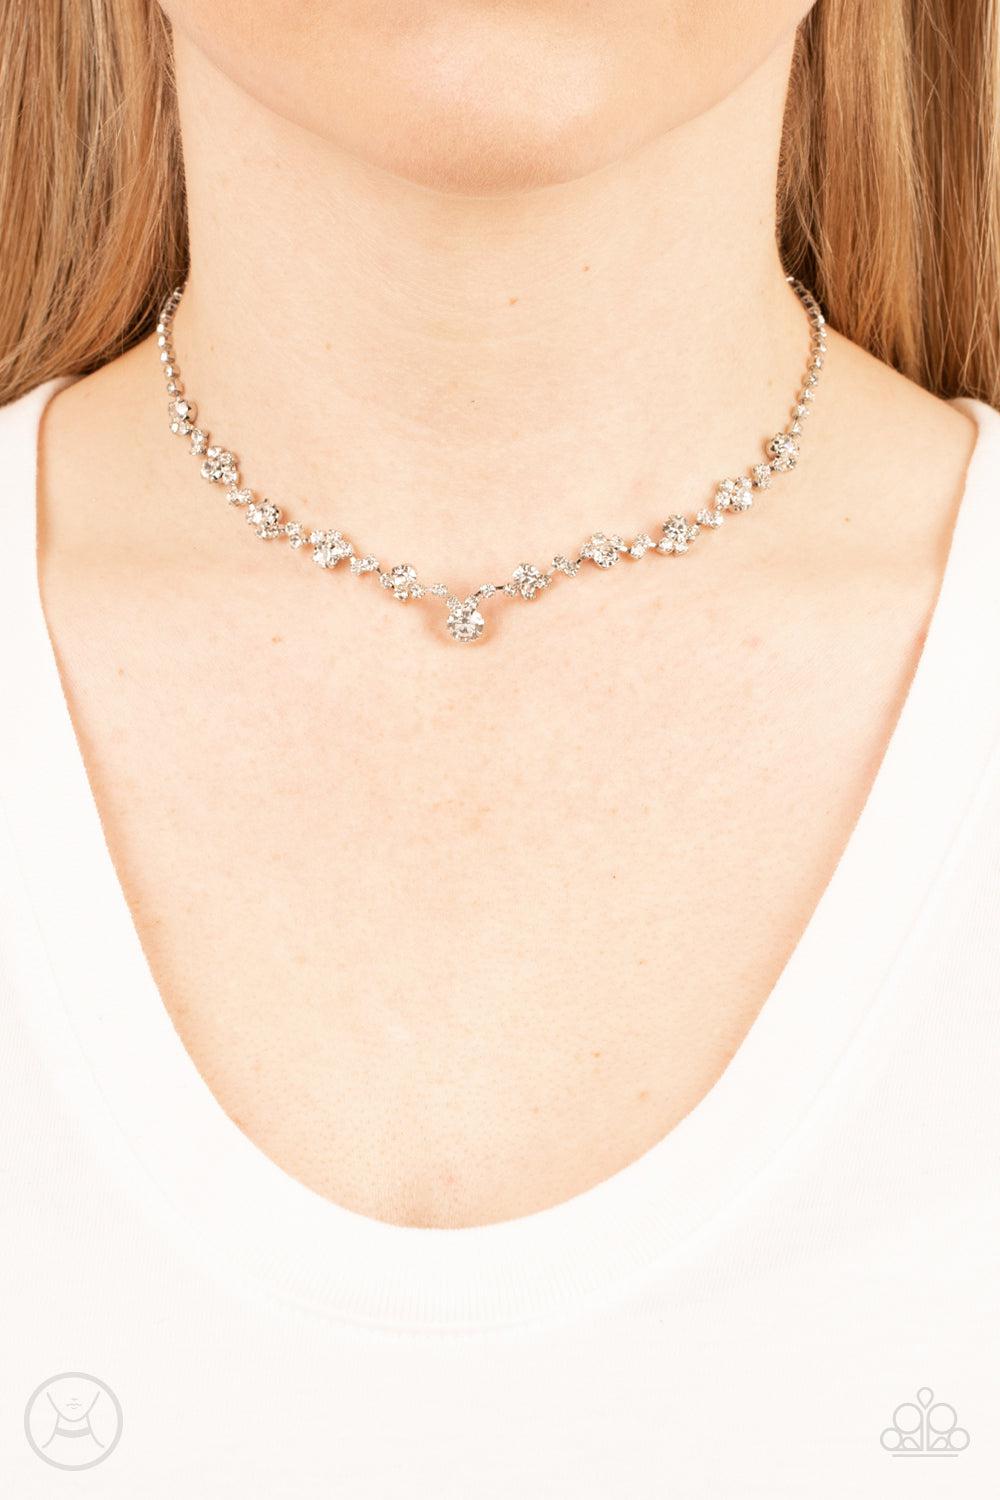 Regal Rebel White Rhinestone Choker Necklace - Paparazzi Accessories-on model - CarasShop.com - $5 Jewelry by Cara Jewels